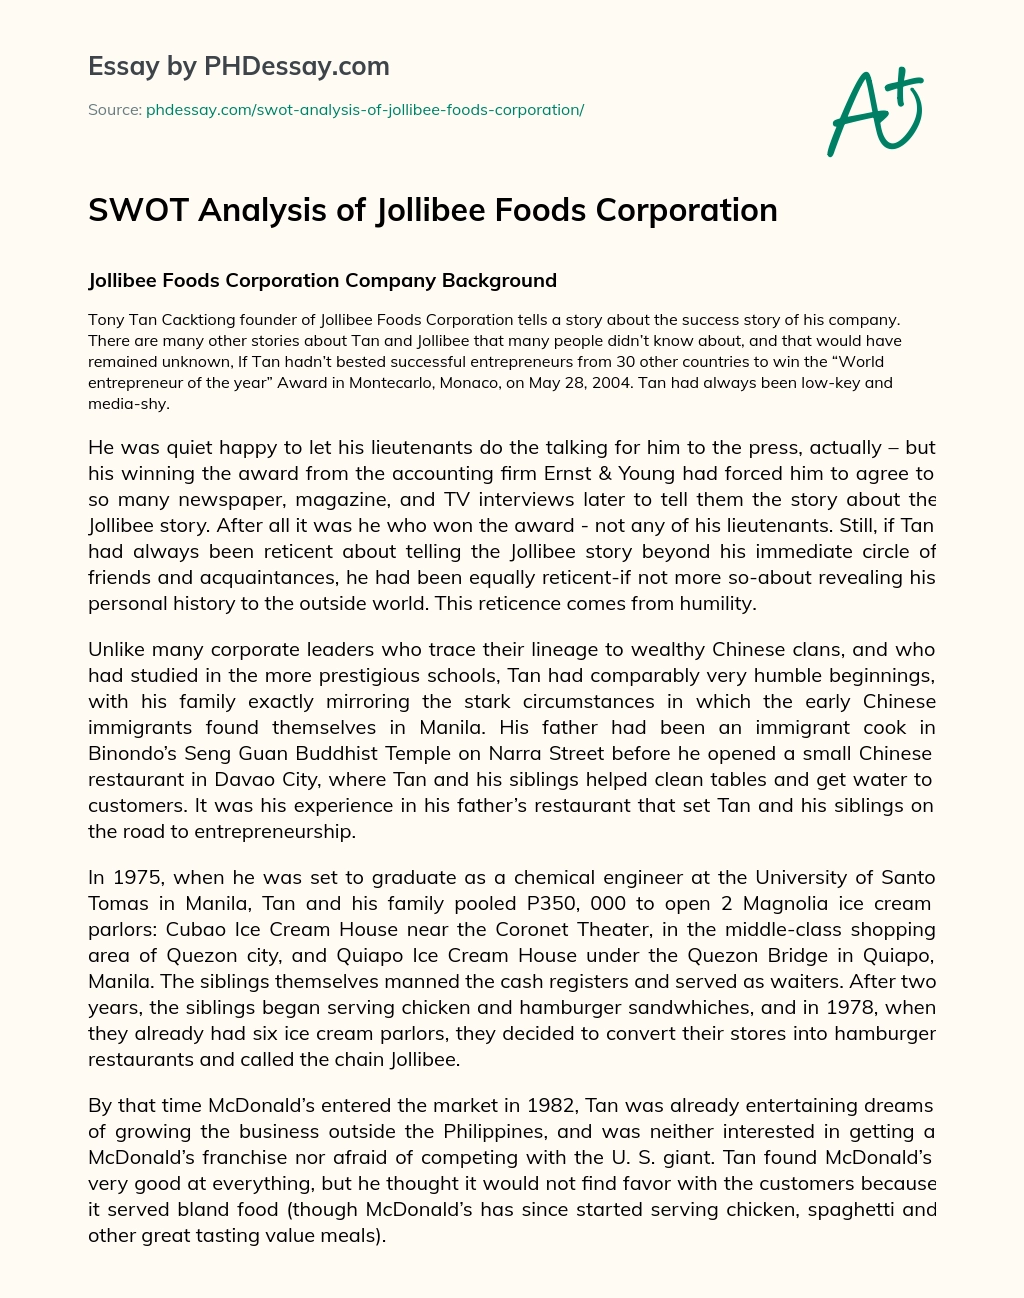 SWOT Analysis of Jollibee Foods Corporation essay